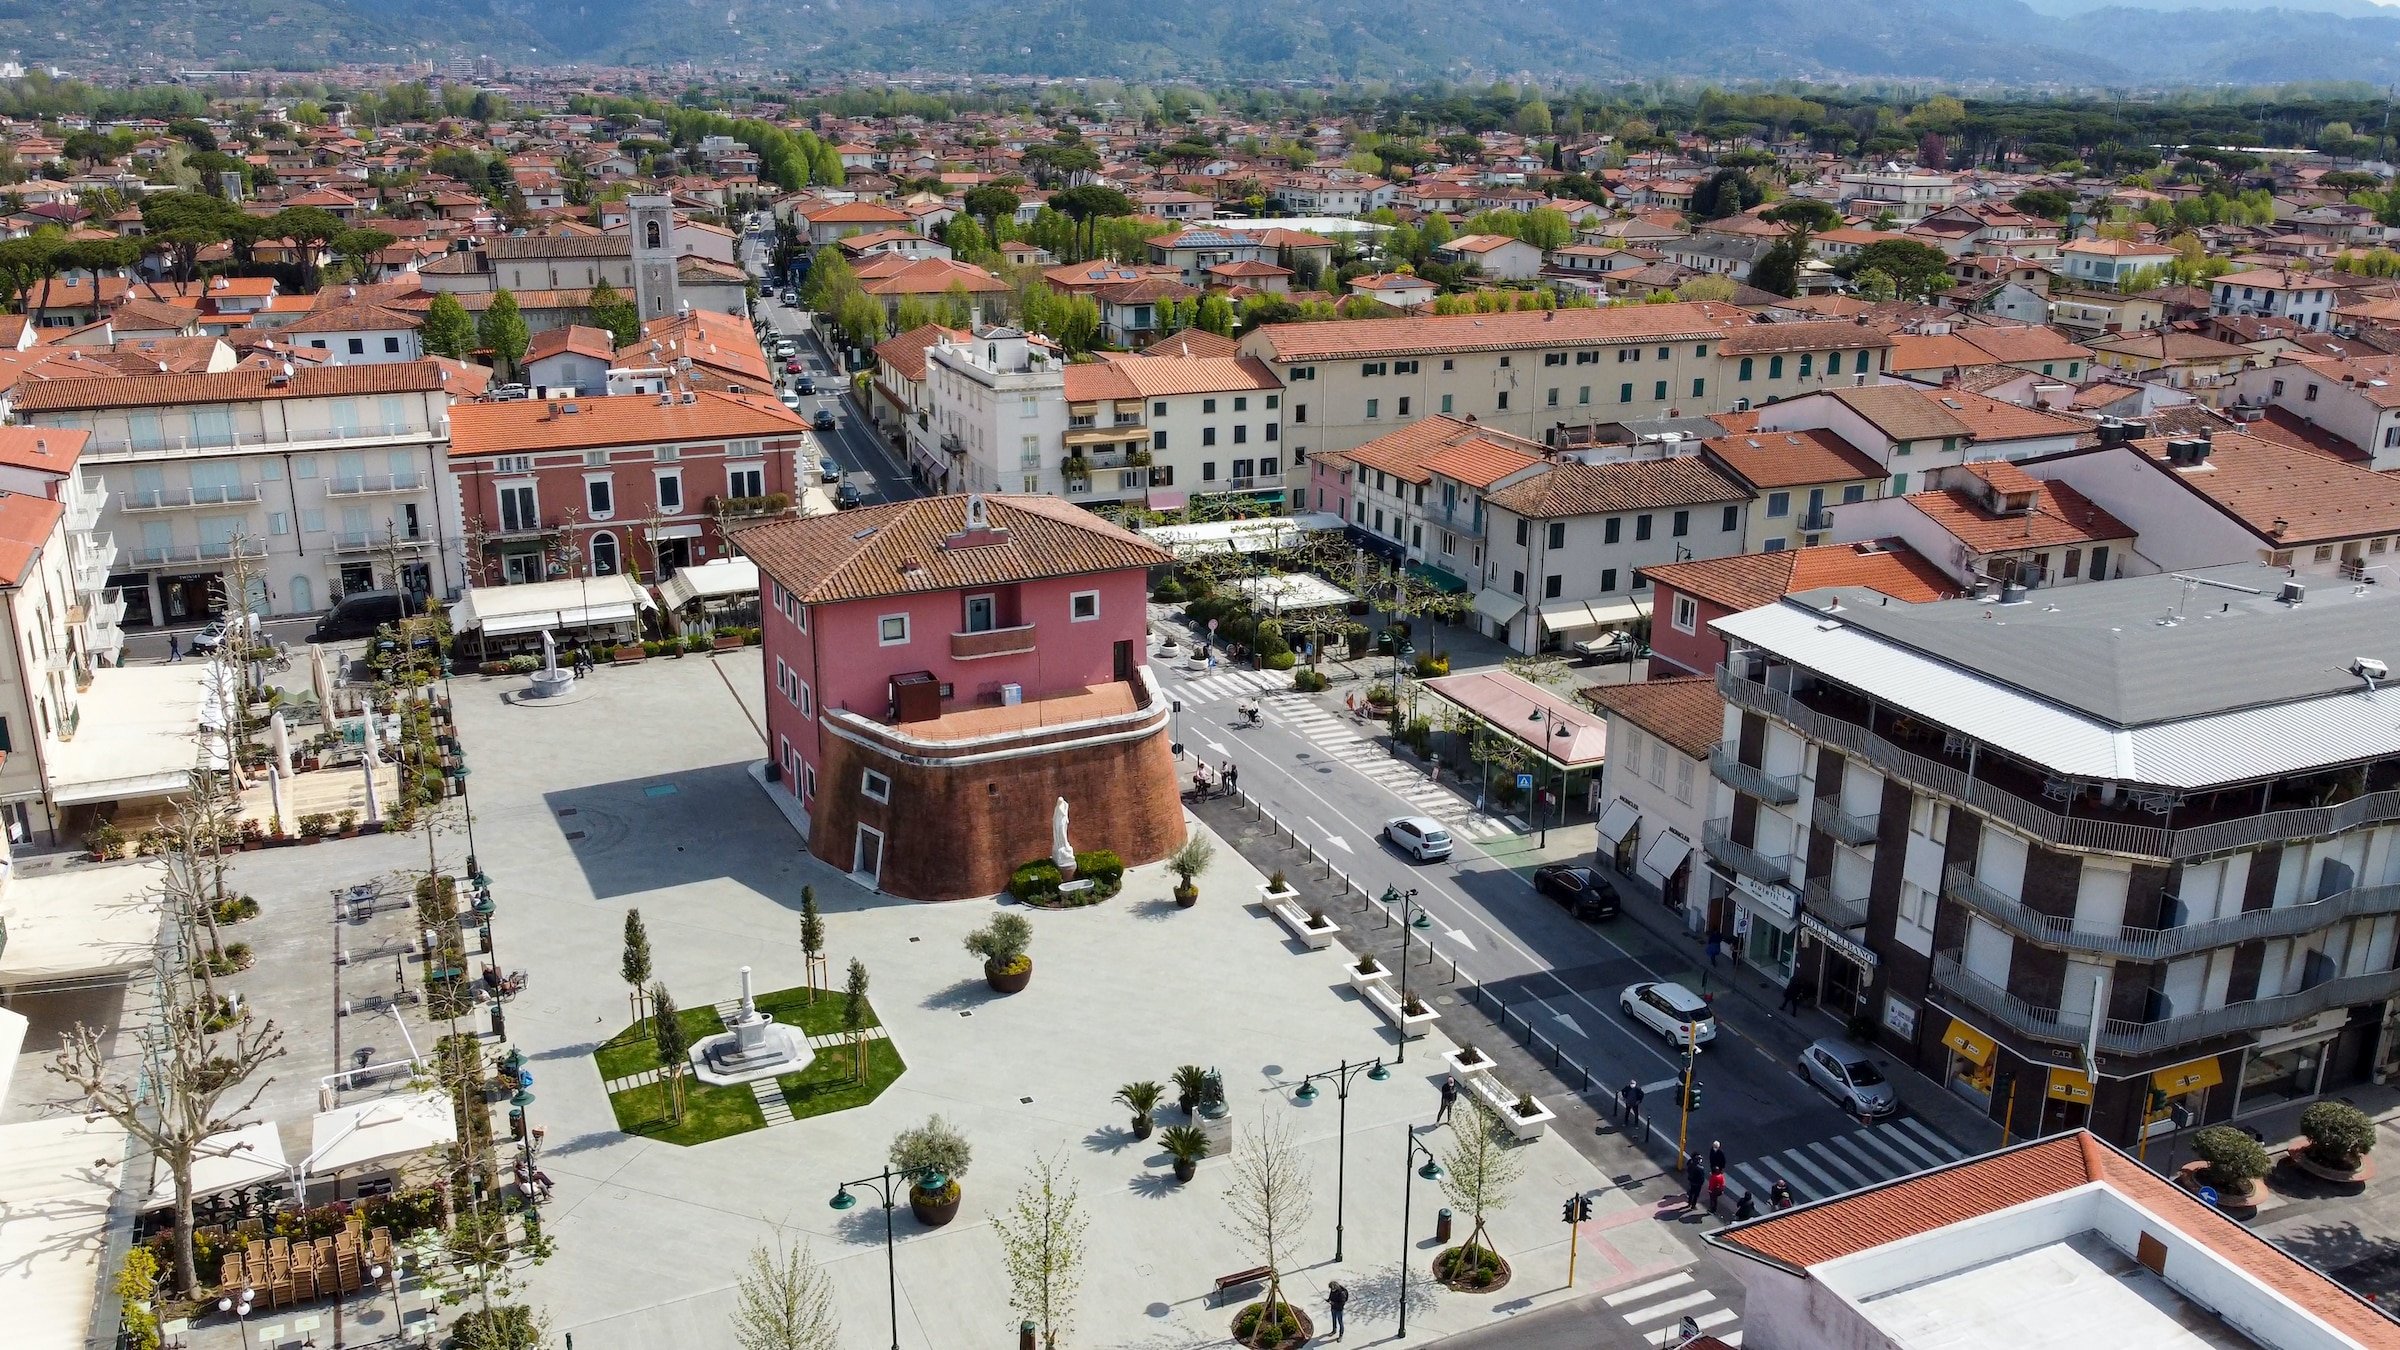 Aerial Photo Of Forte Dei Marmi Town Center